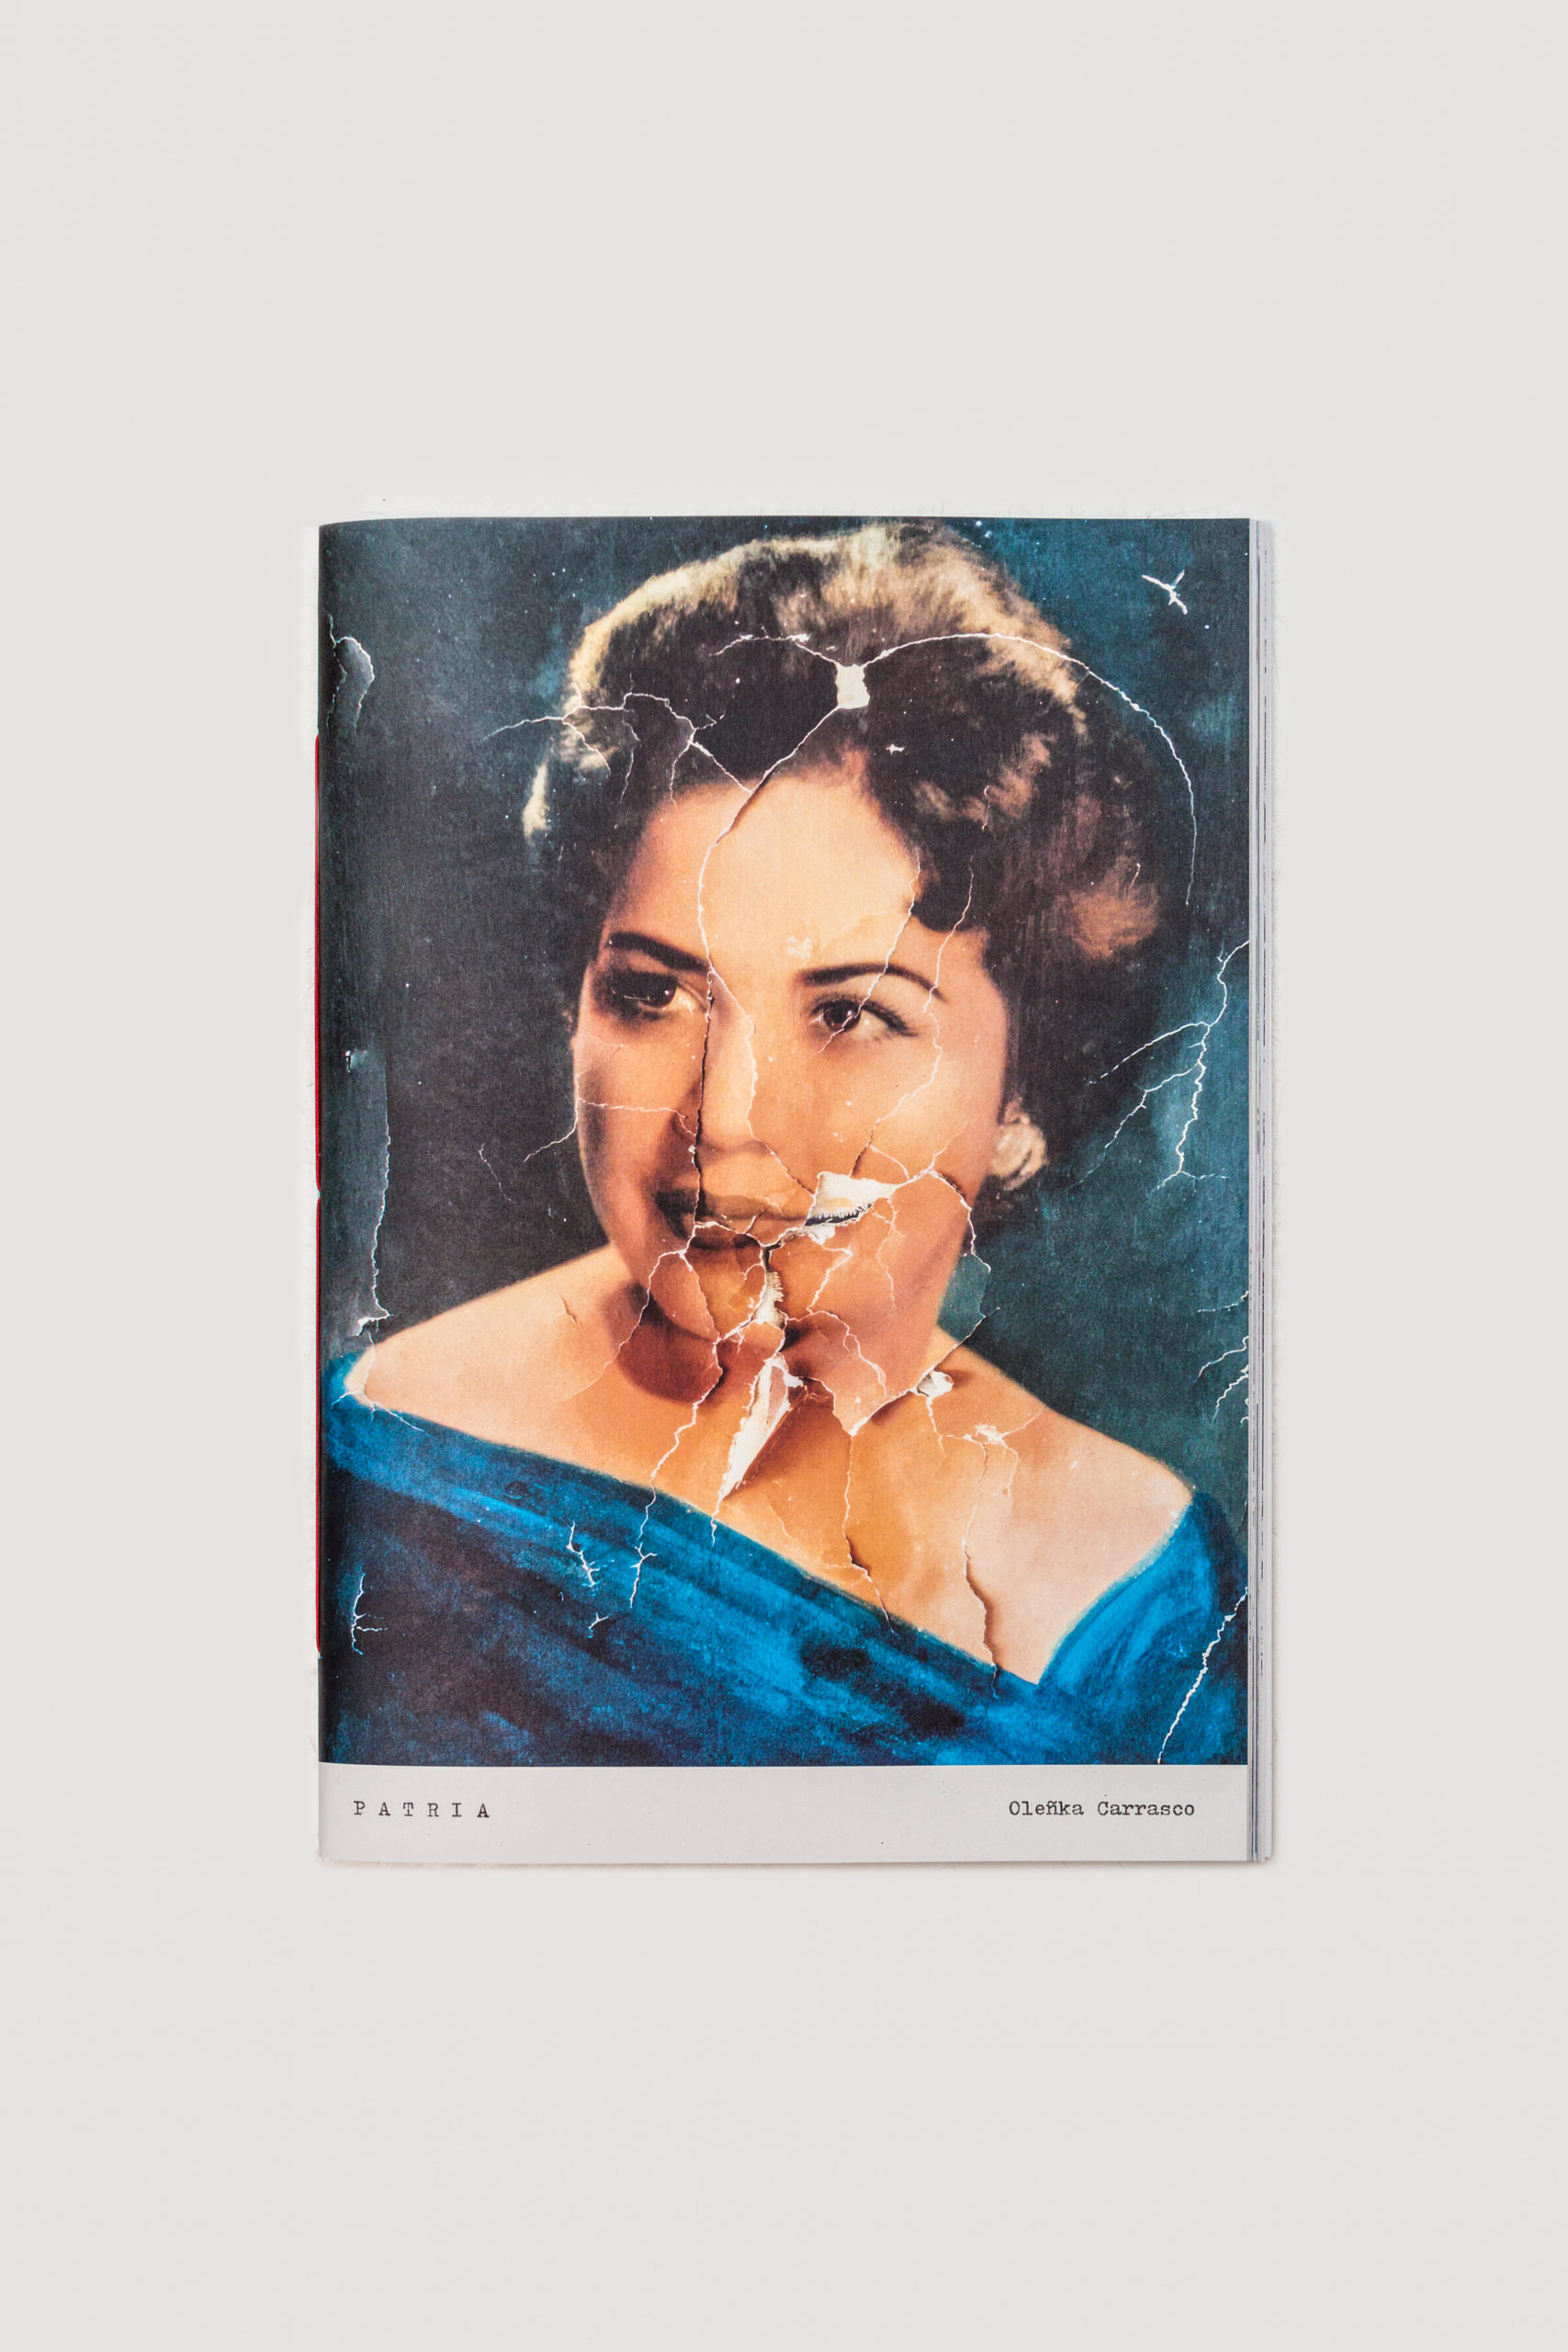 Covers of PATRIA, Oleñka Carrasco's Photobook